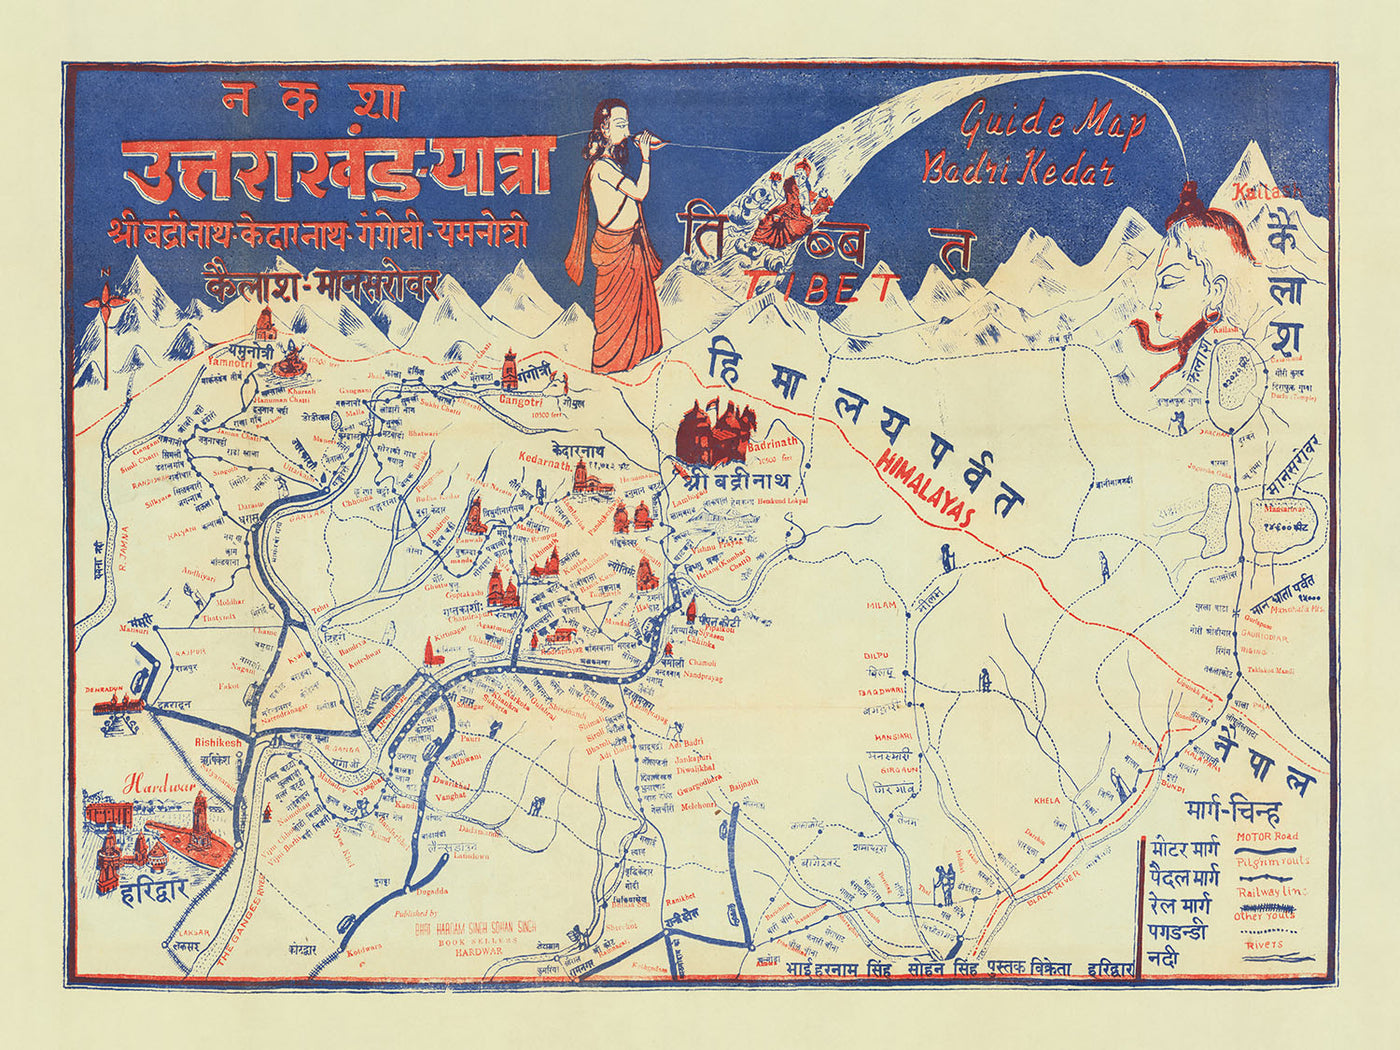 Old Map of Uttarakhand Pilgrimage by Singh, 1960: Chota Char Dham, Mt. Kailash, Ganges Myth, Badrinath, Kedarnath